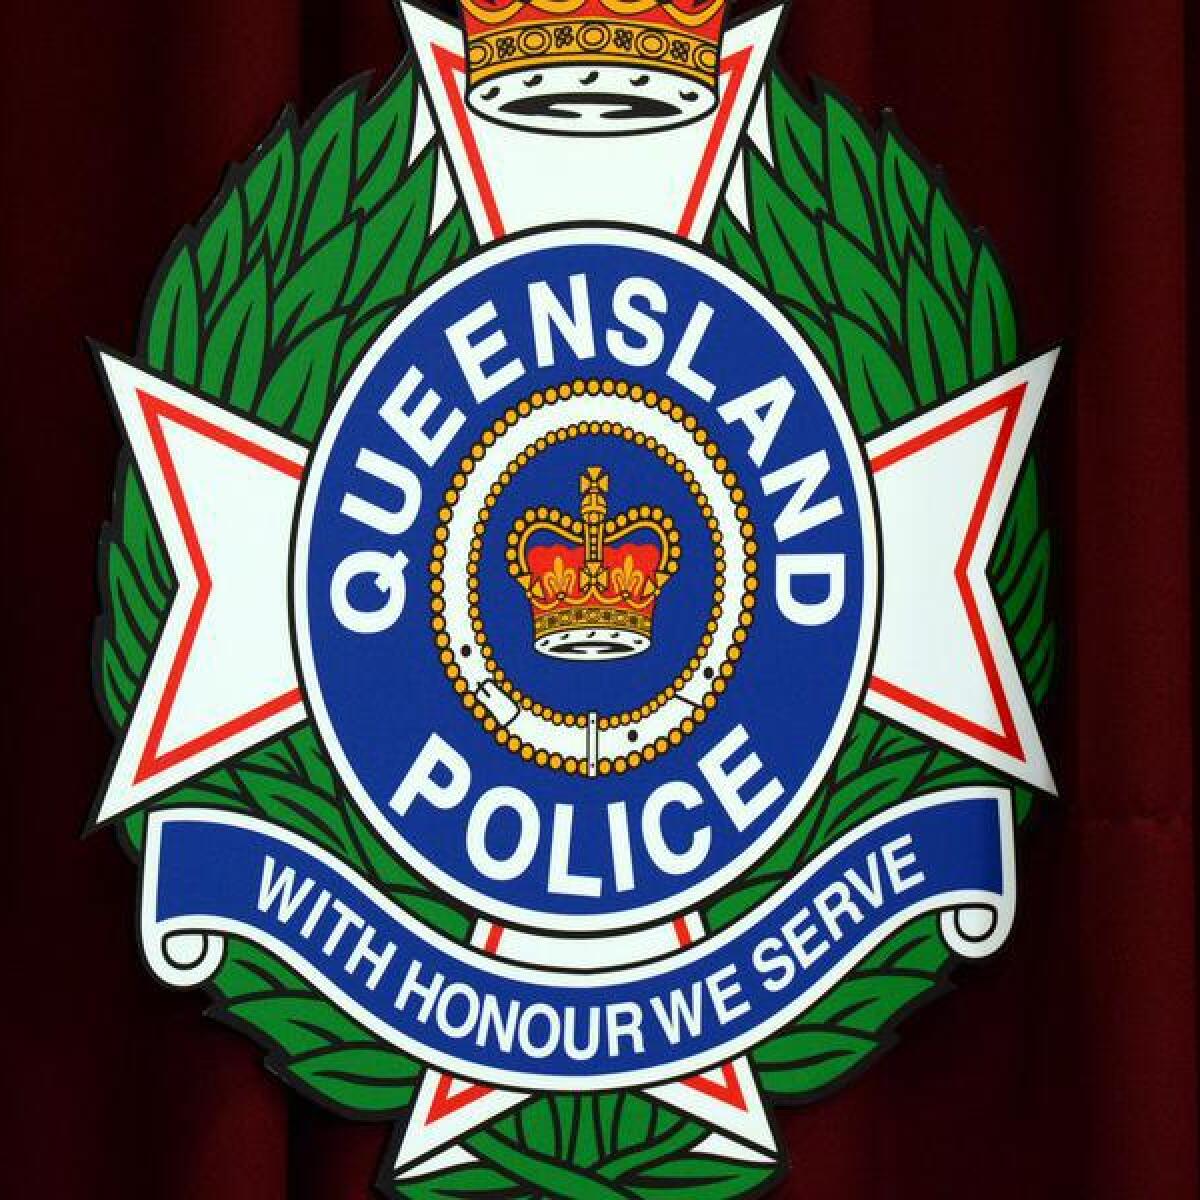 Queensland Police logo.